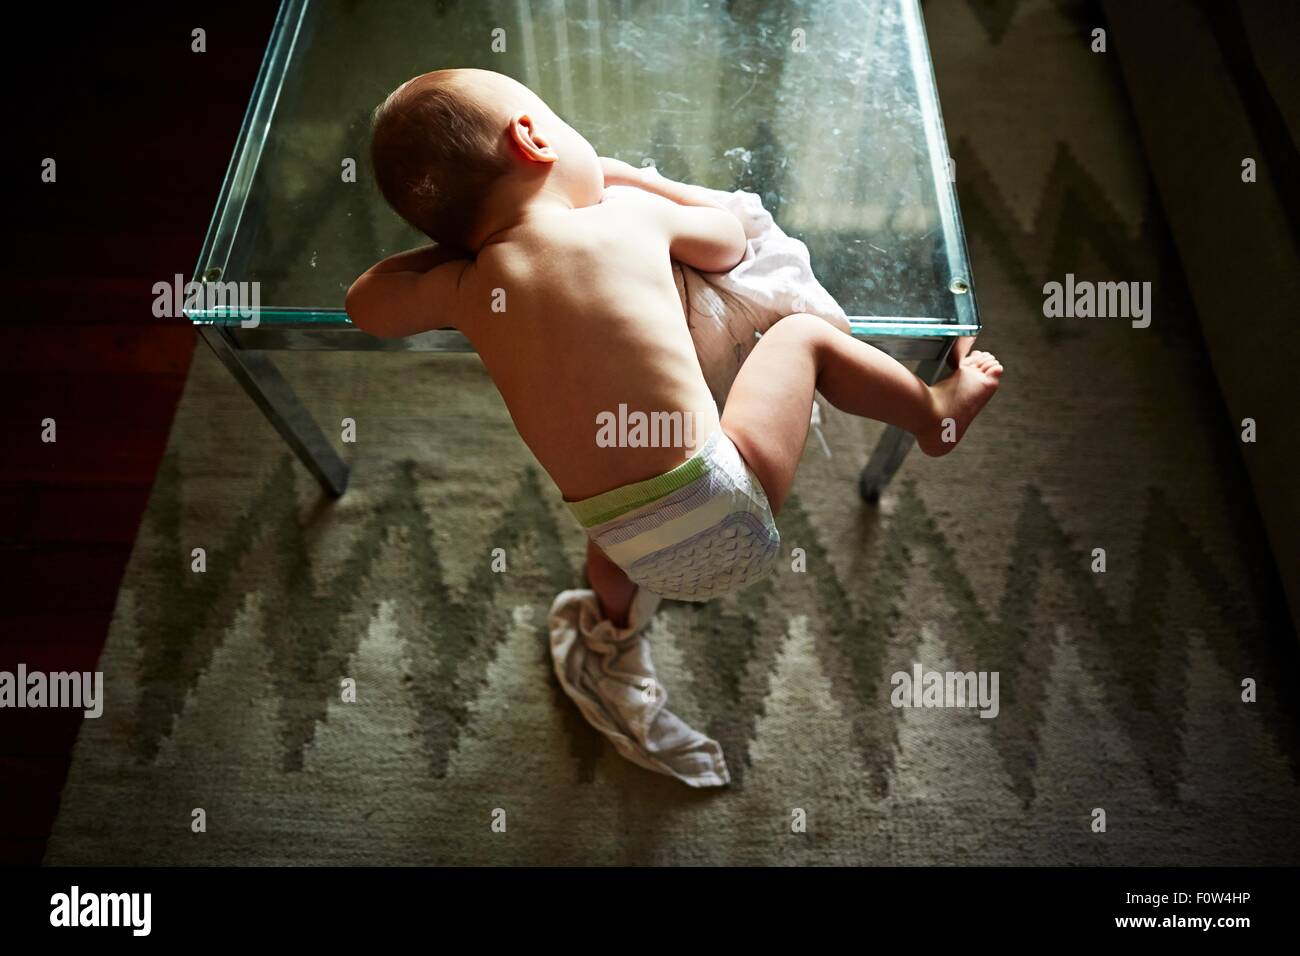 Boy half-climbing up on glass table Stock Photo